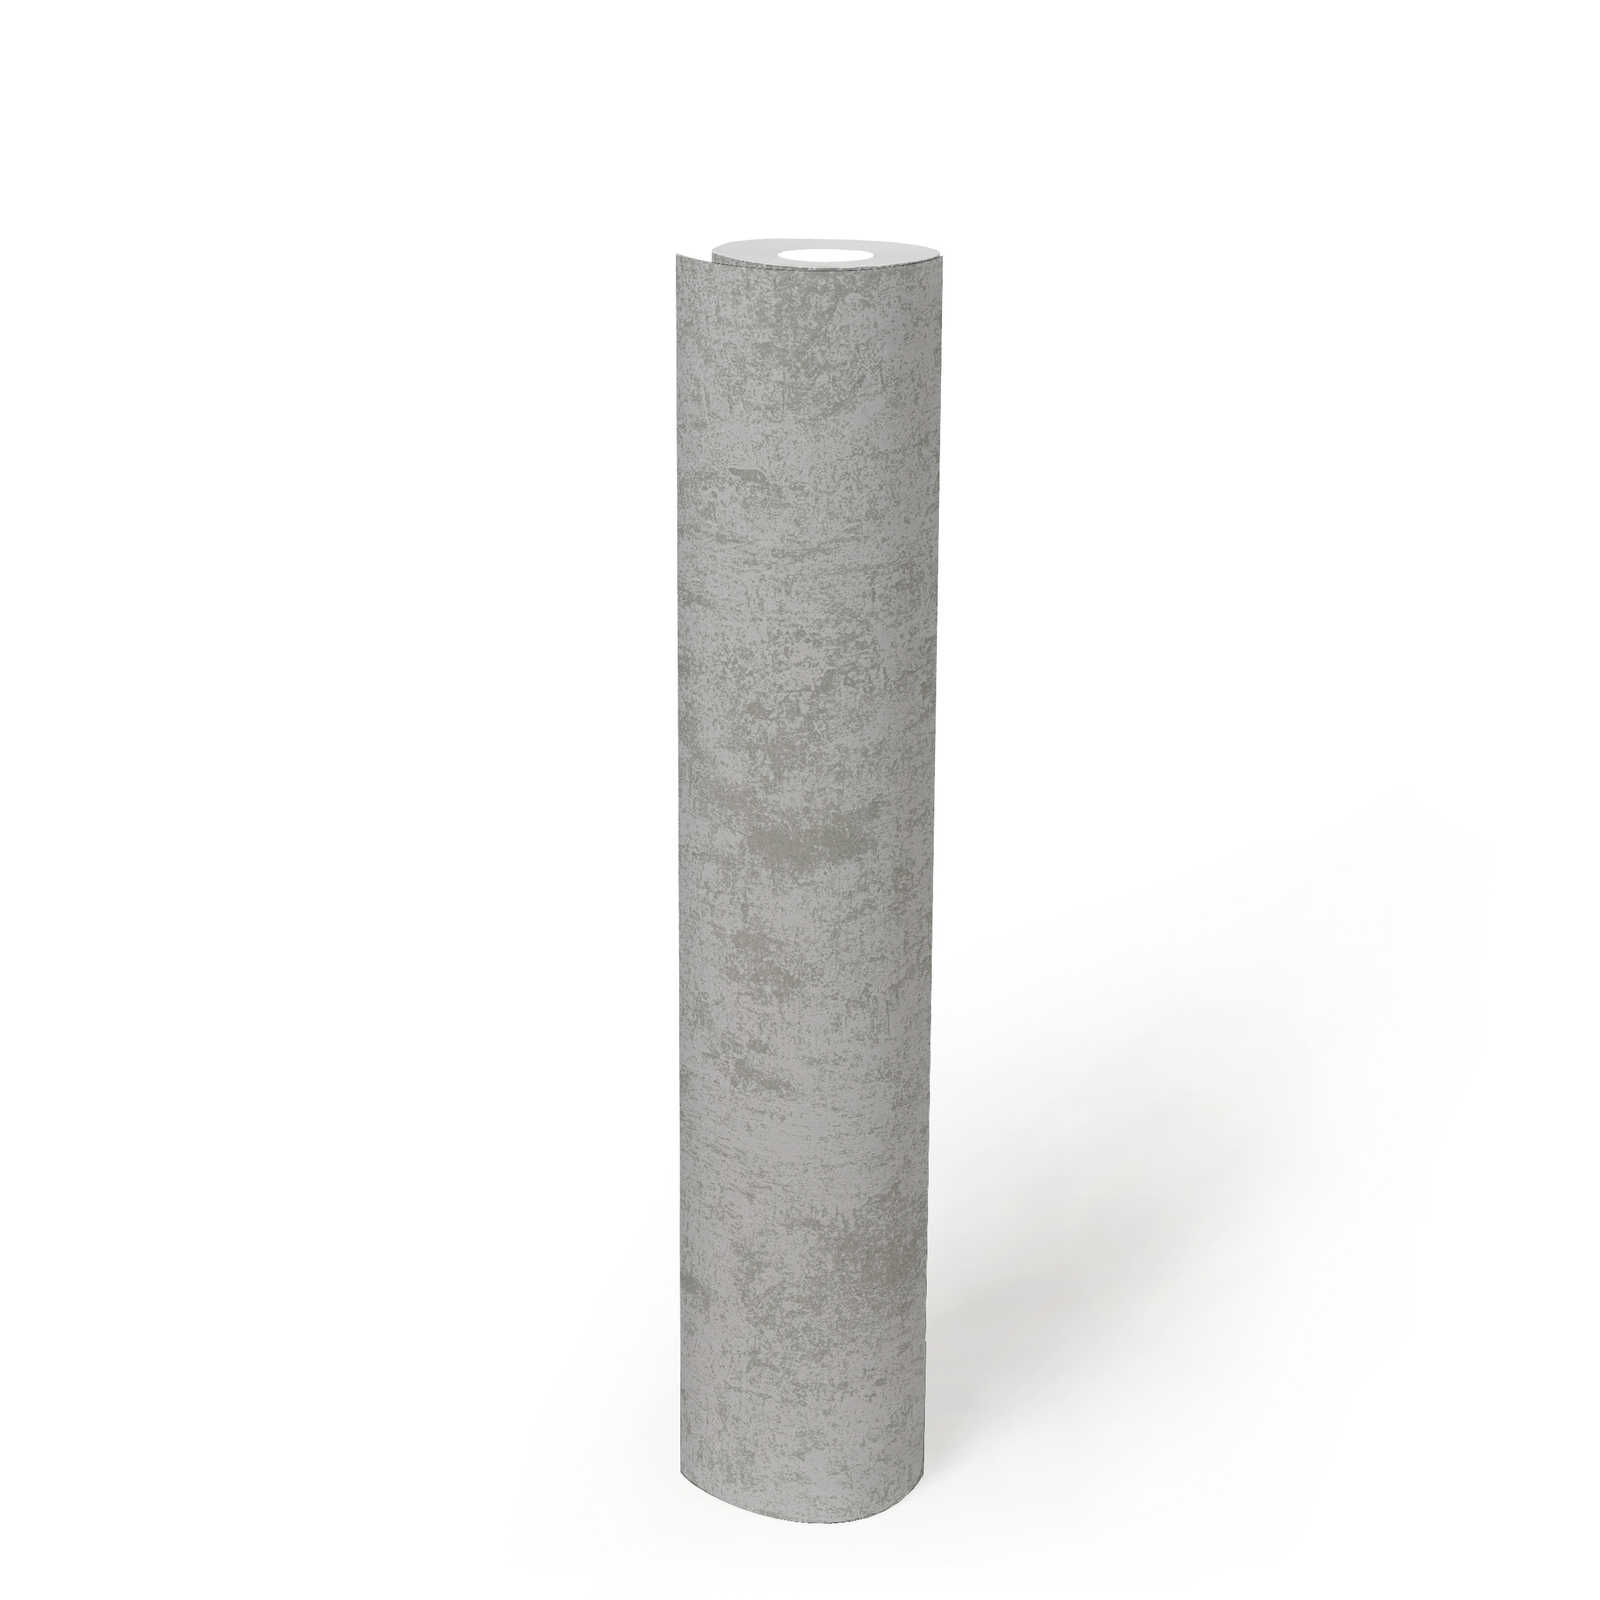             Metal-effect wallpaper smooth glossy - silver, grey, metallic
        